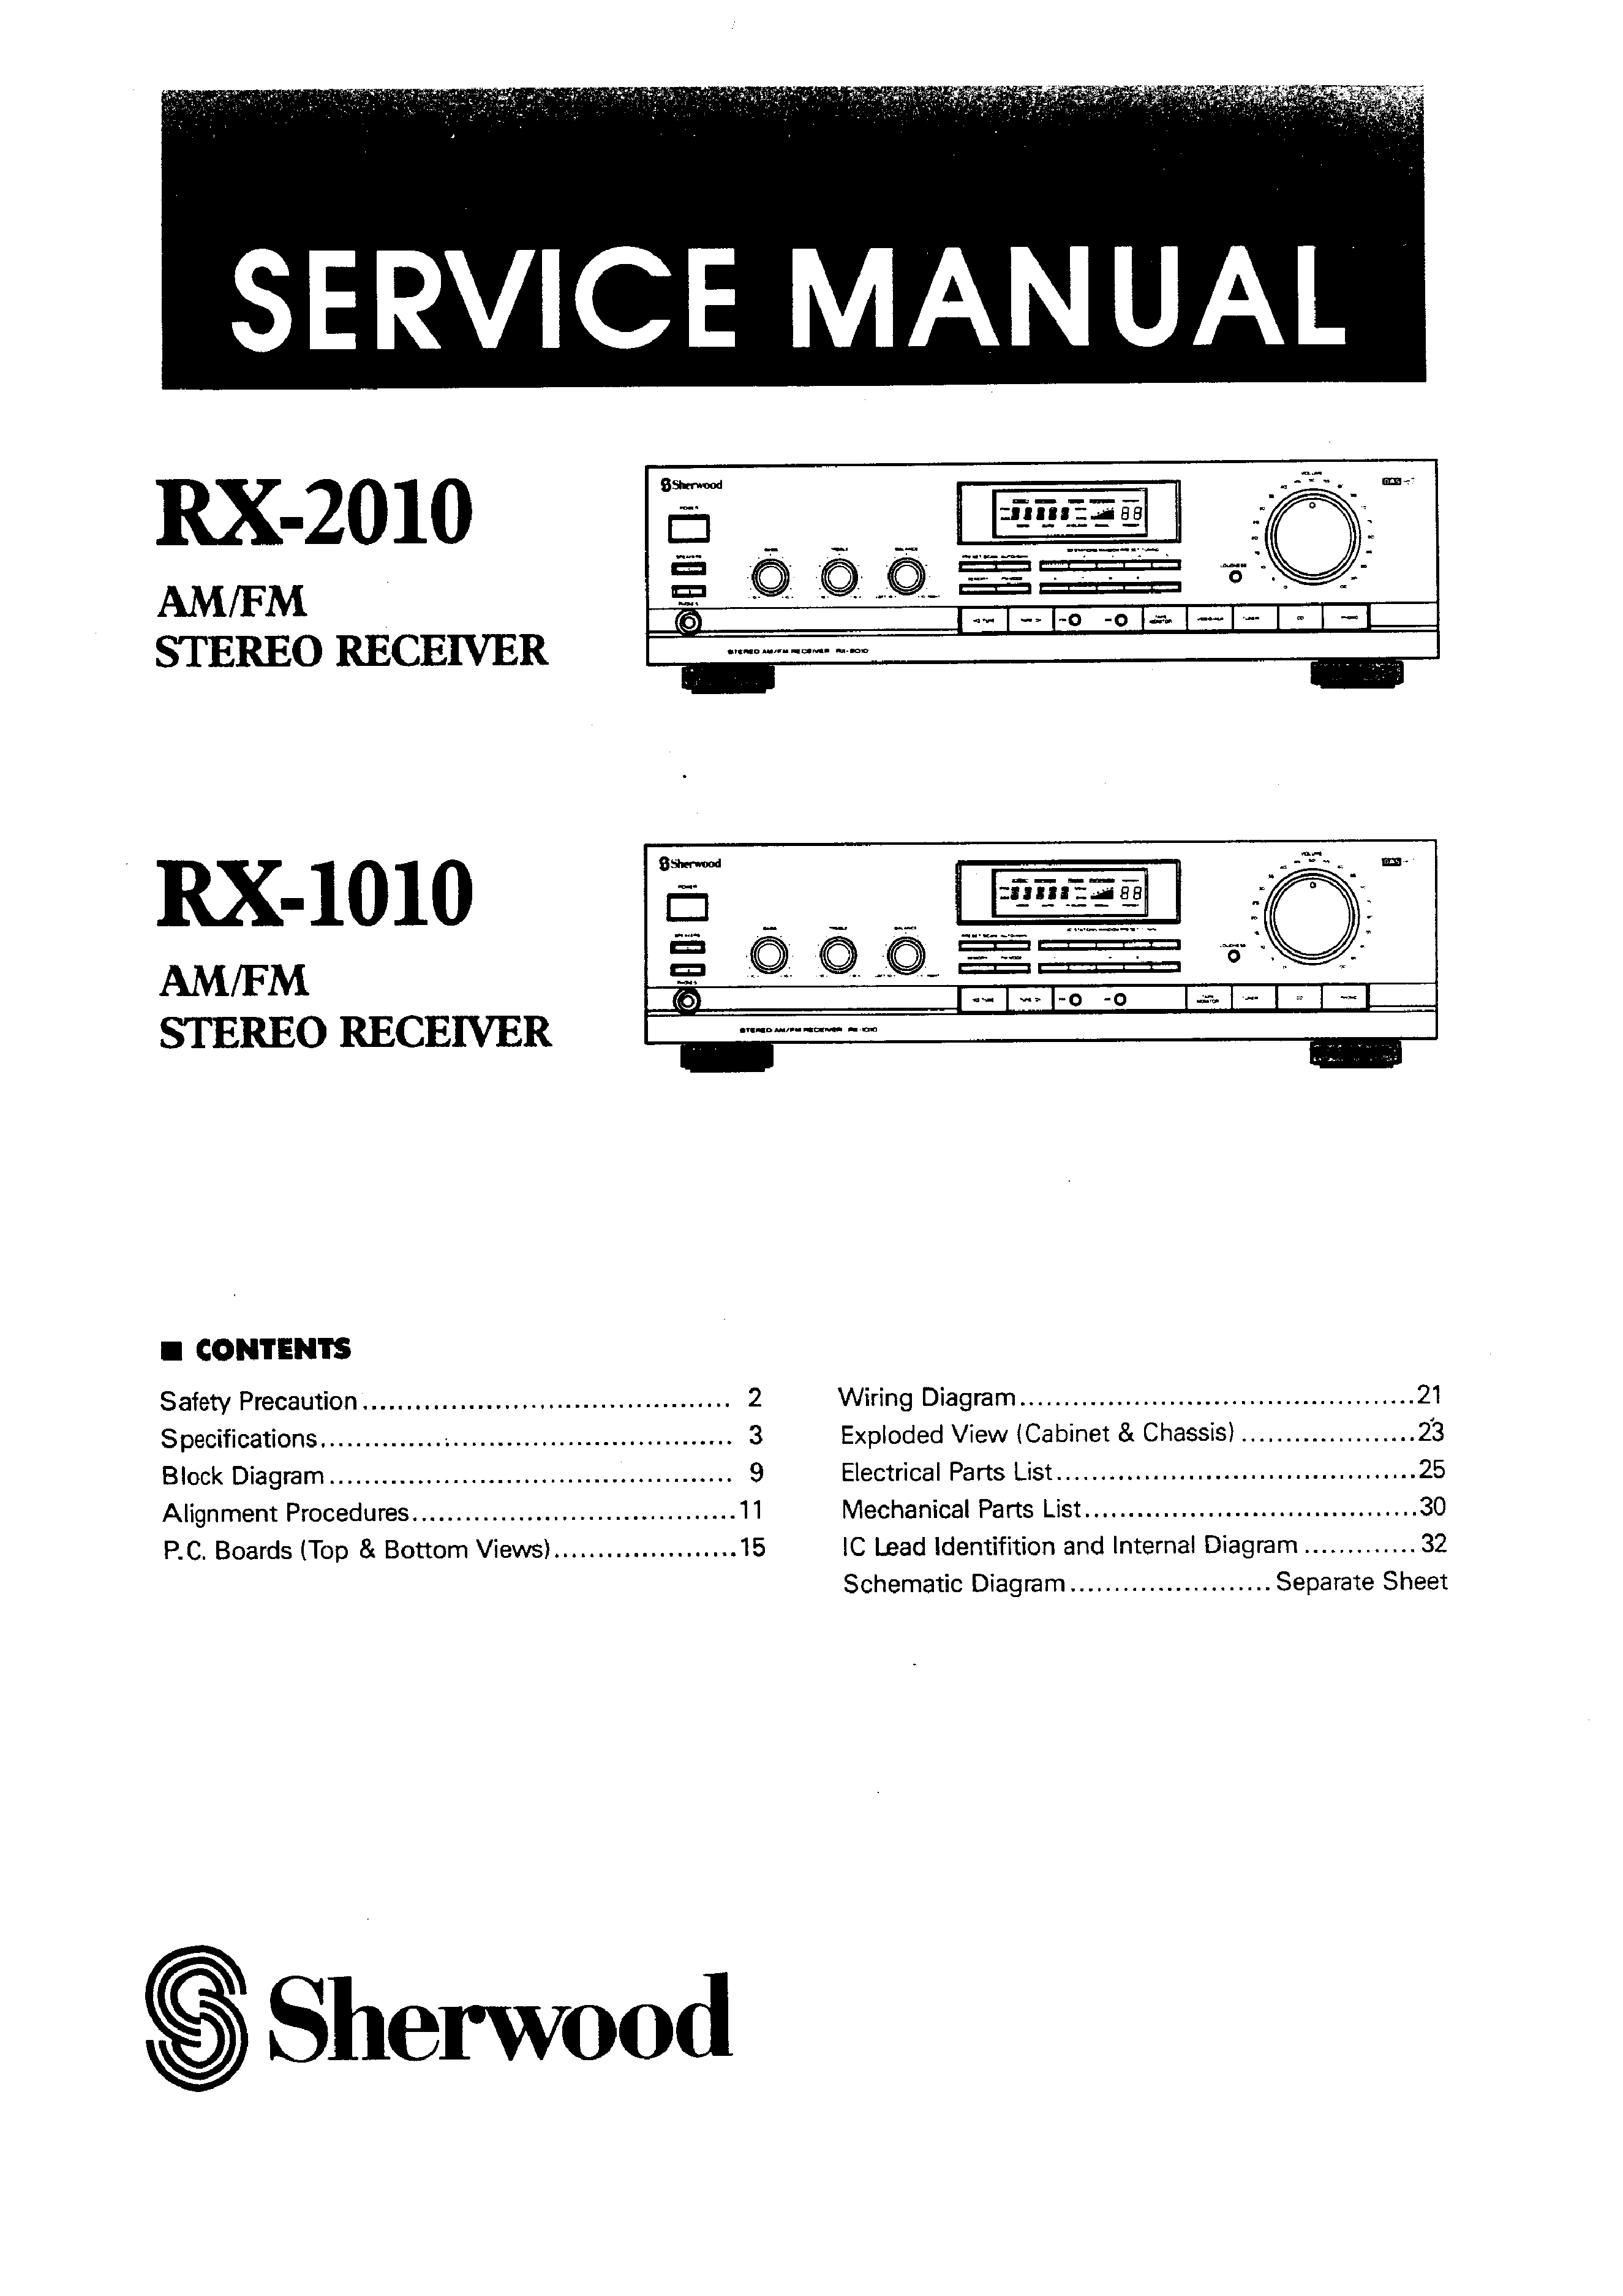 Download Sherwood Ax-4050R Manual